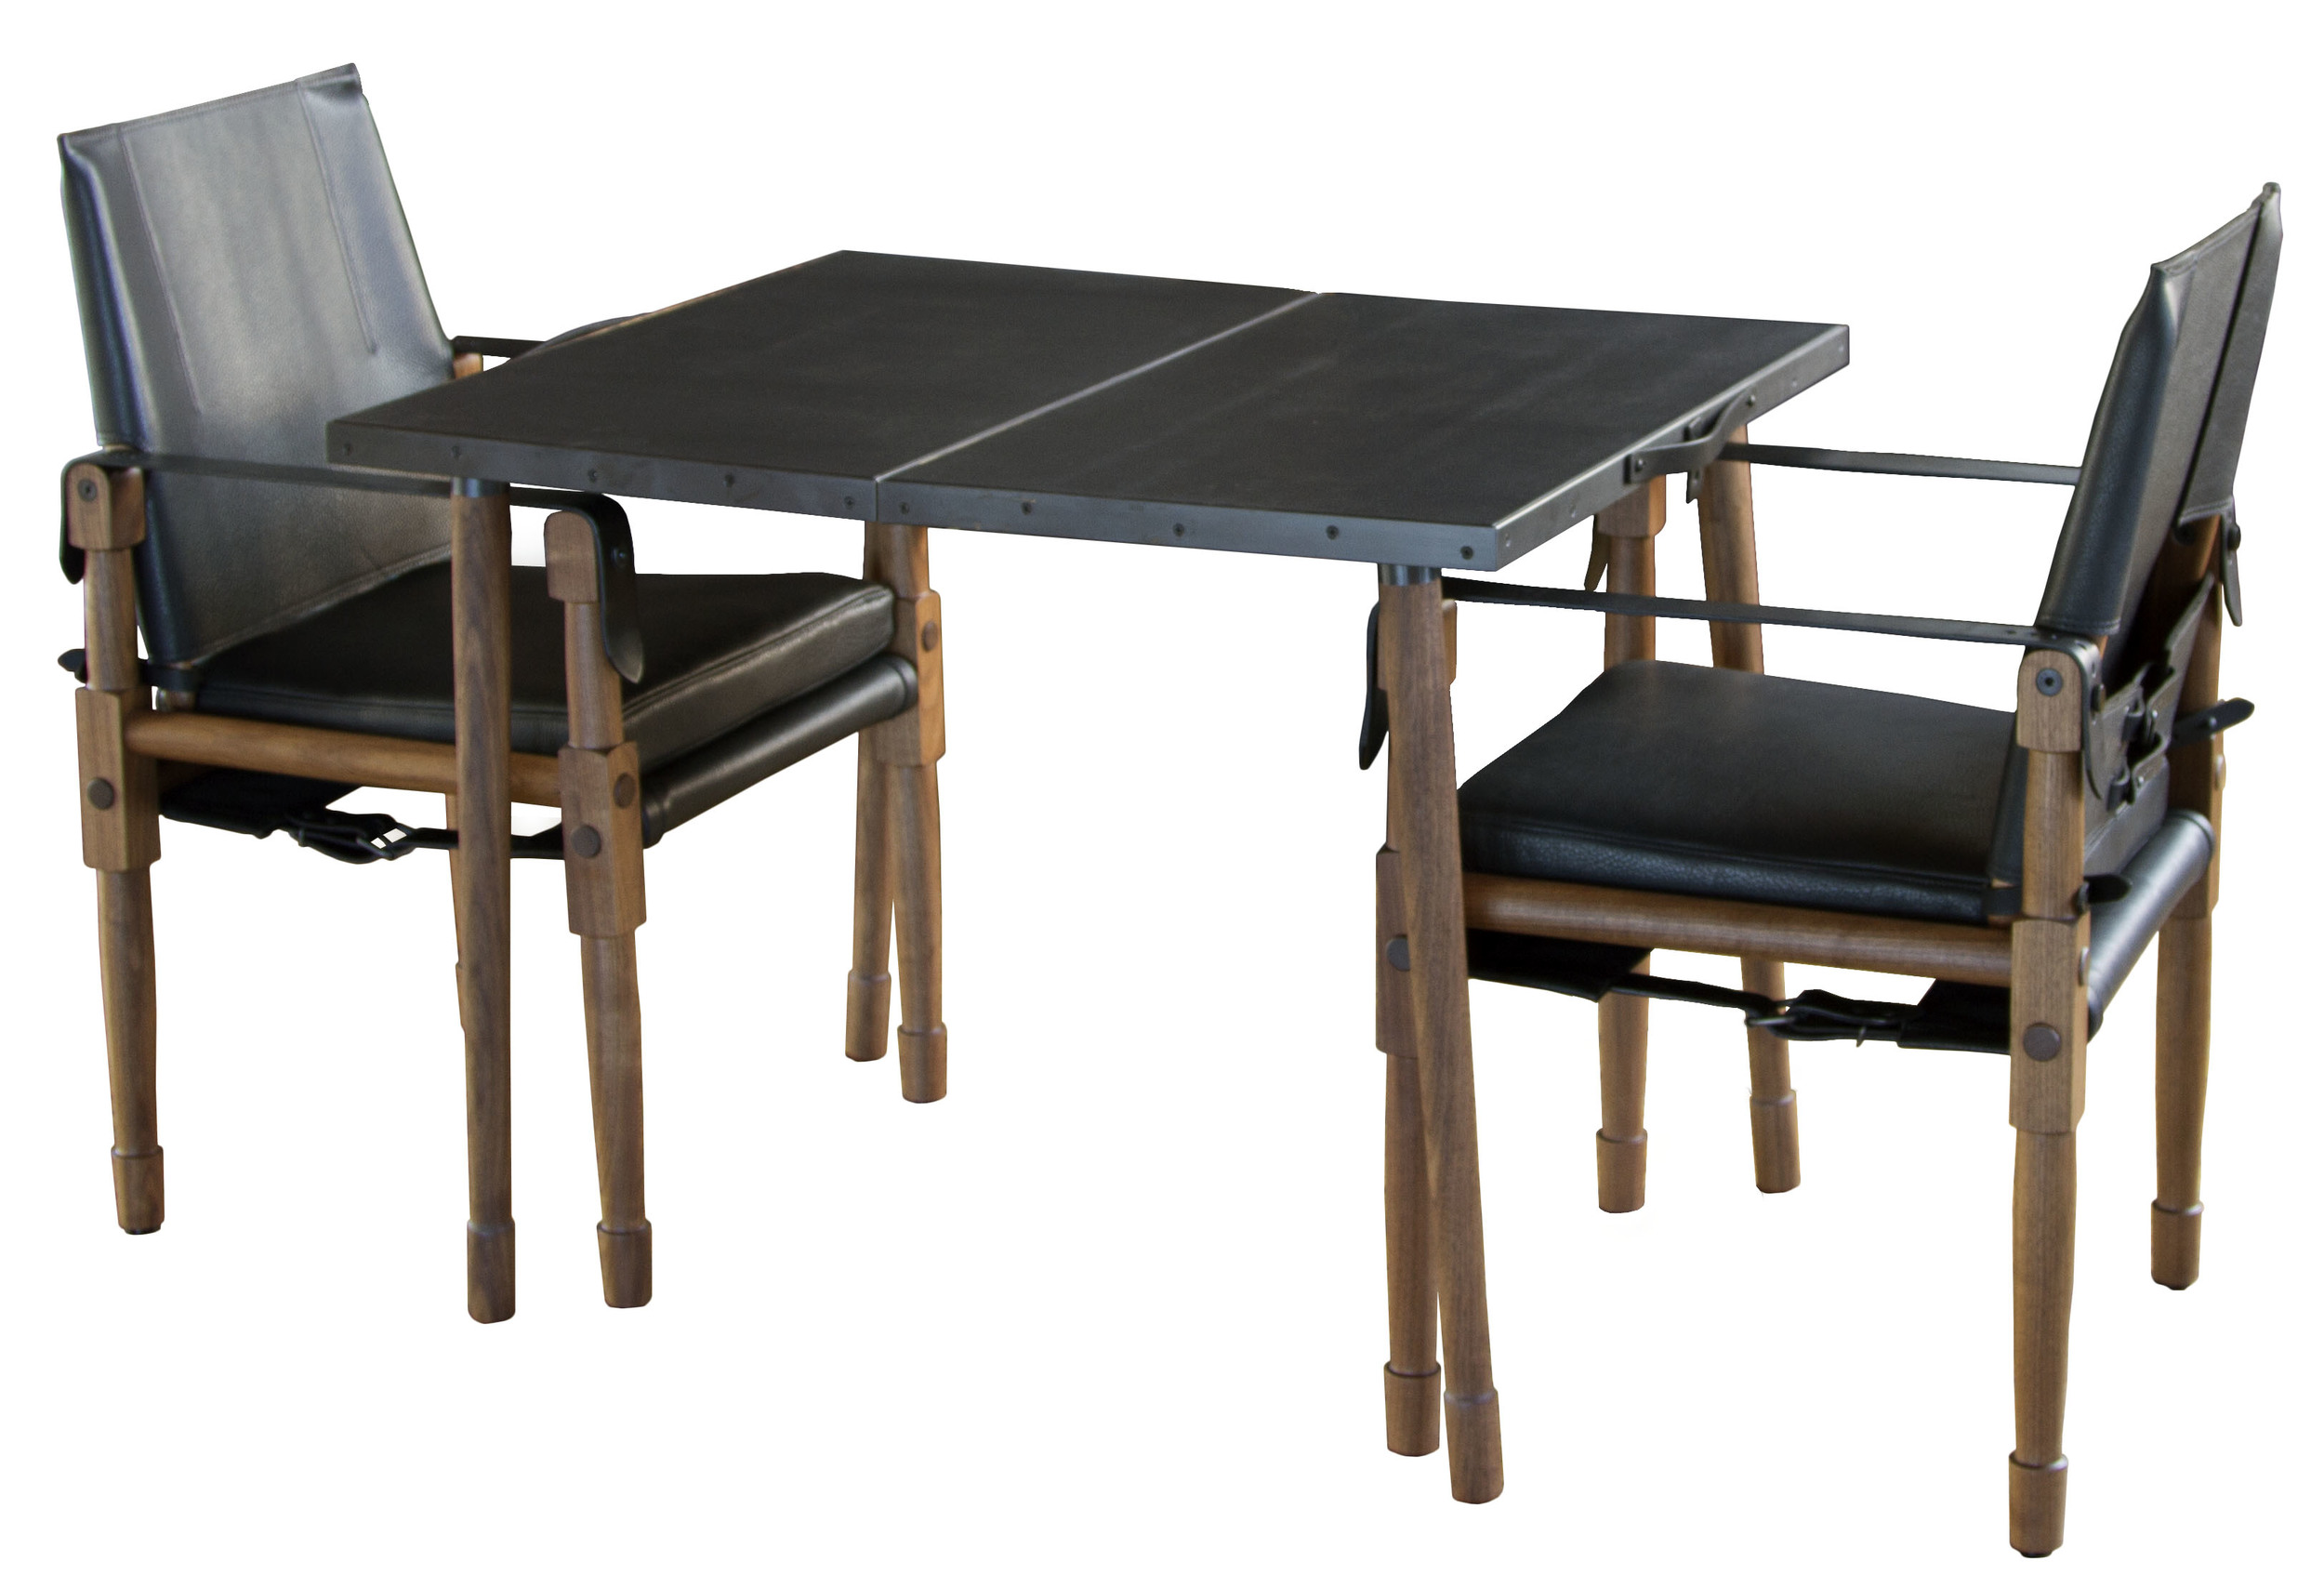 Collingwood Folding Table